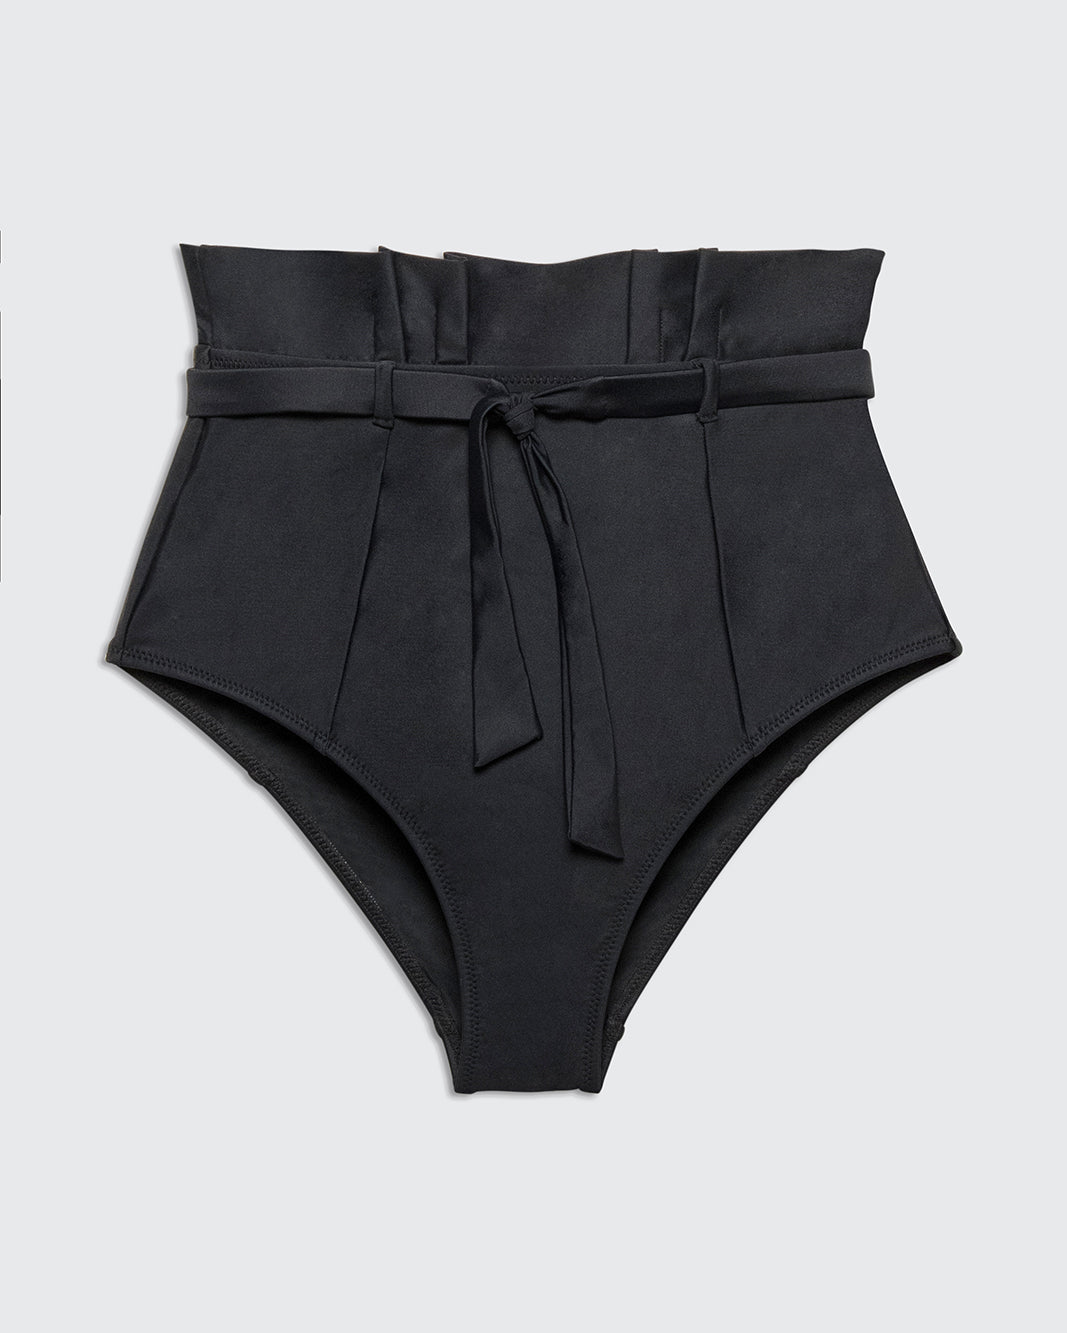 BOND BOTTOM BLACK - BIKINI -BiliBlond Swimwear